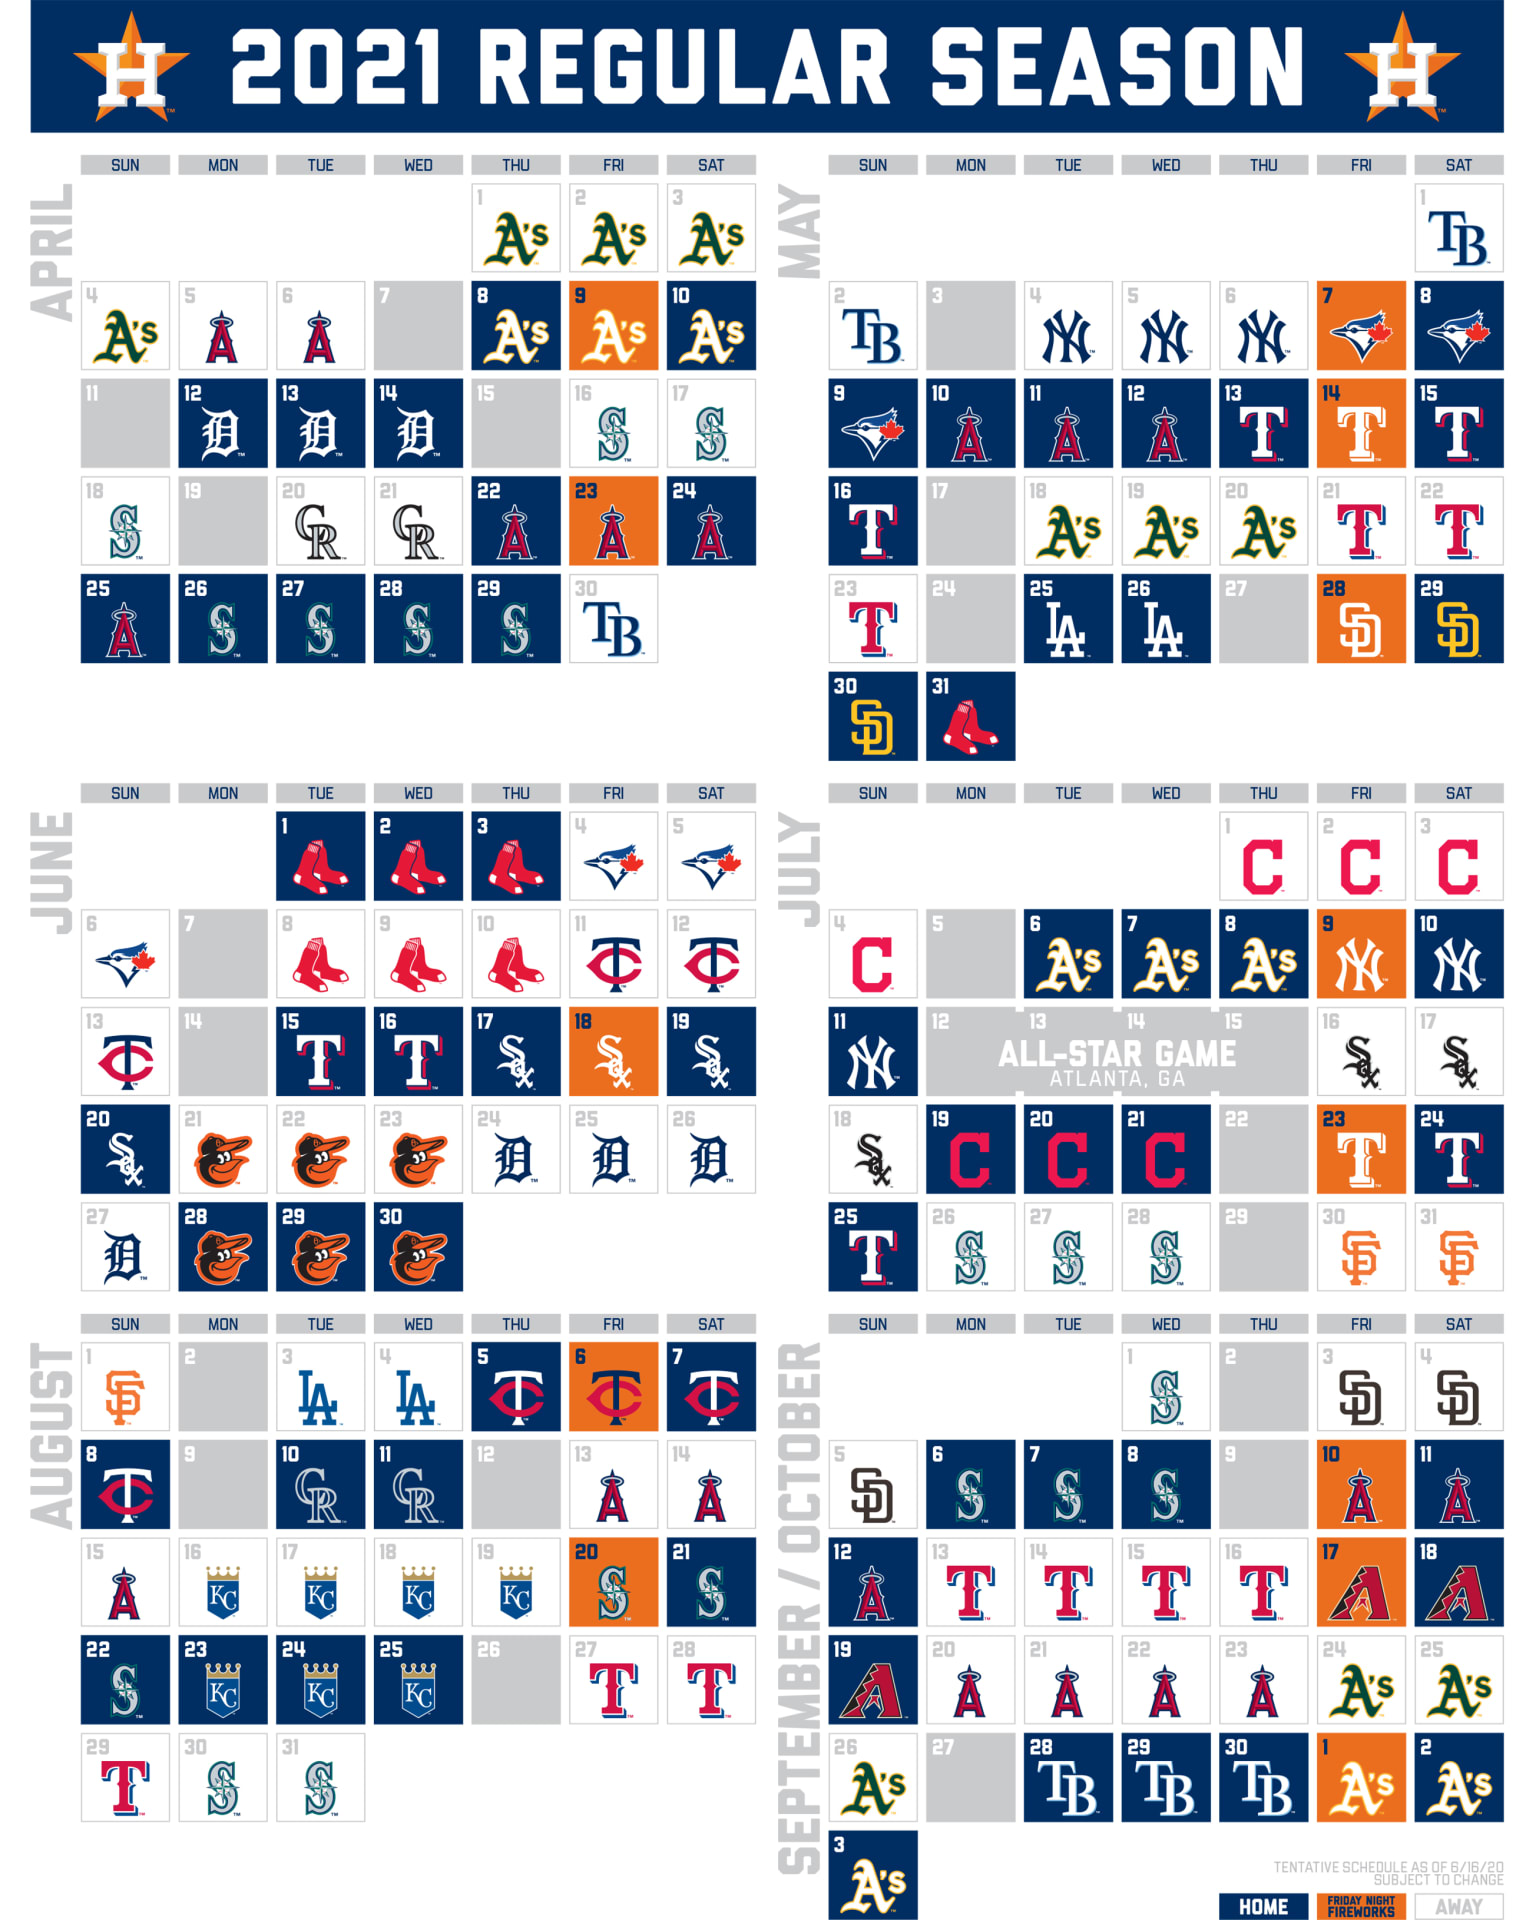 Astros Printable Schedule | Houston Astros